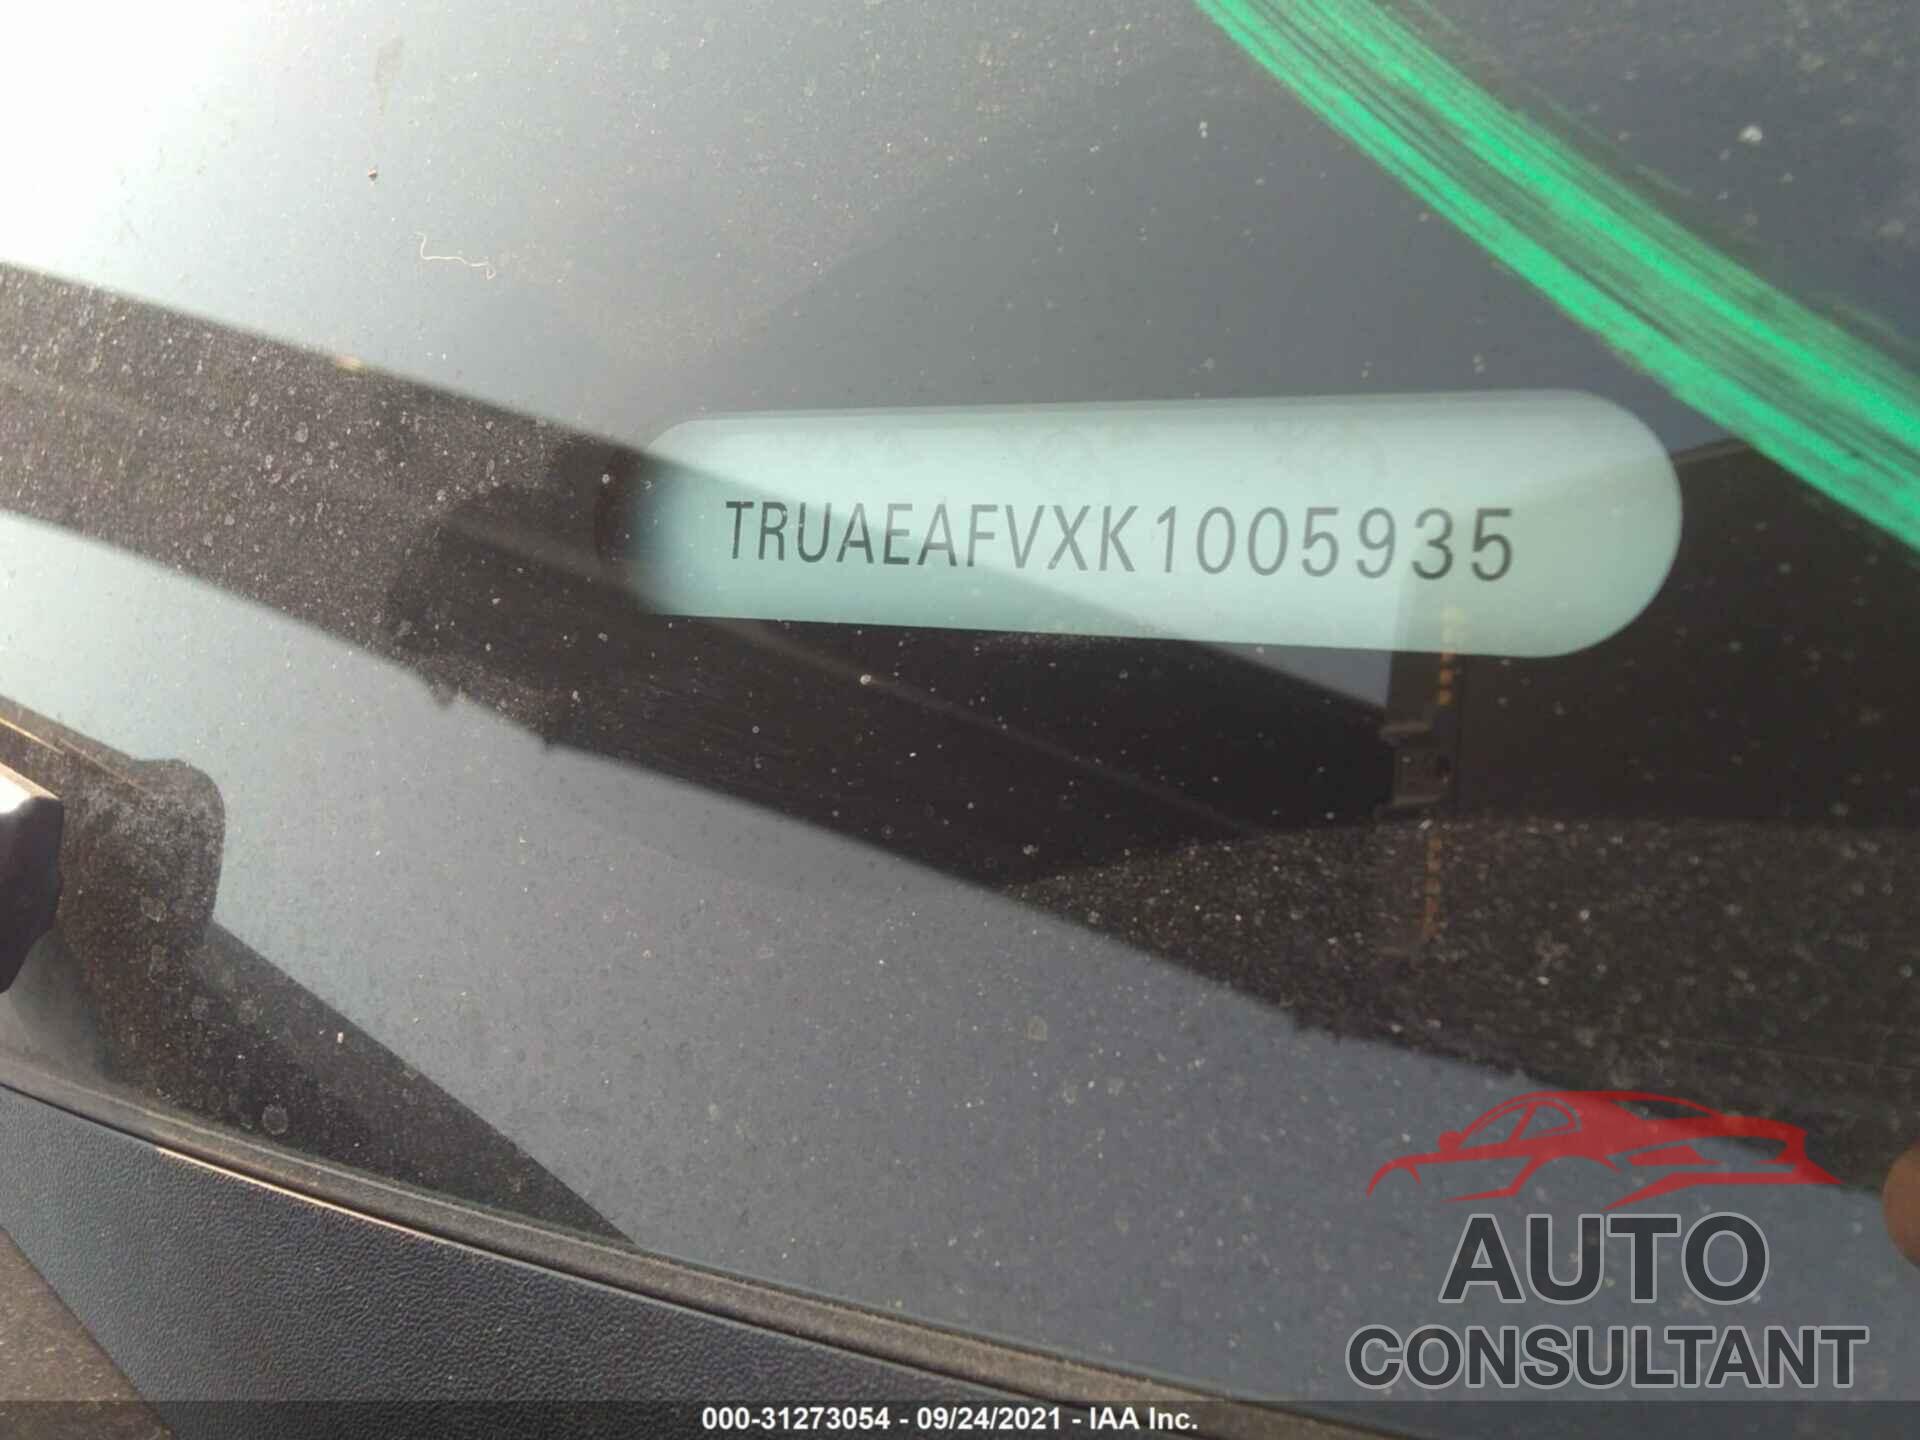 AUDI TT COUPE 2019 - TRUAEAFVXK1005935